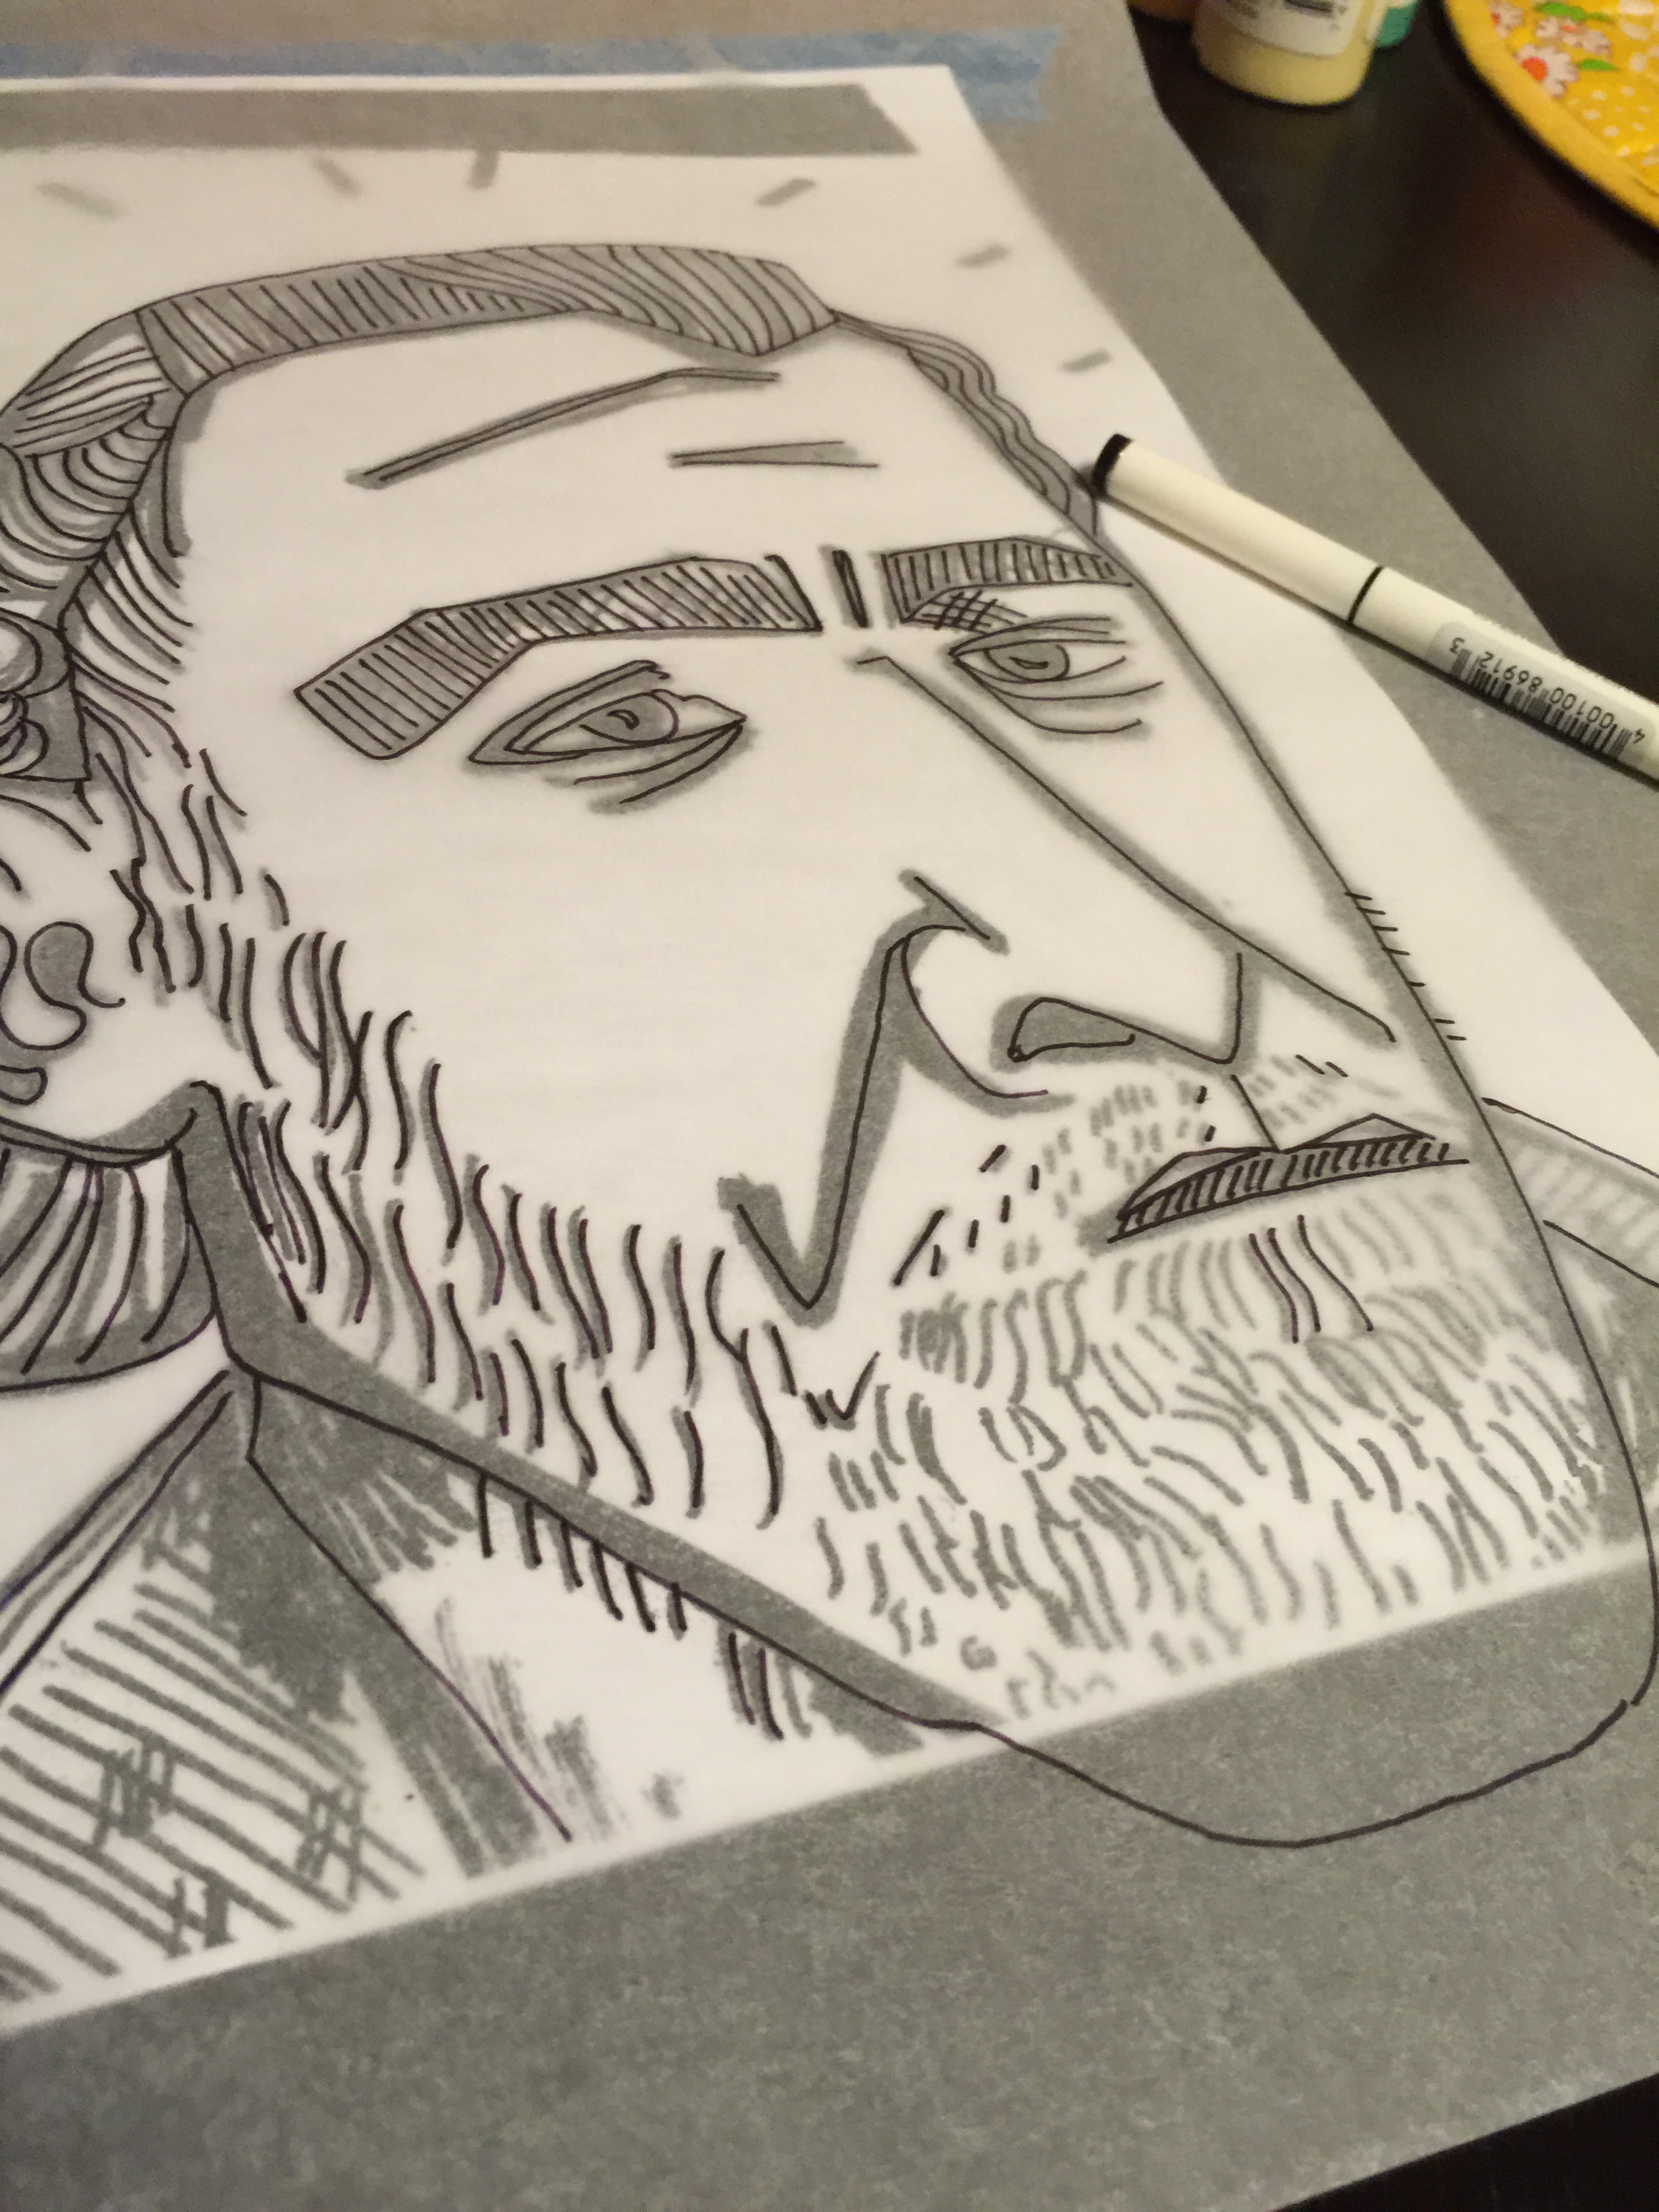  Charles Bukowski in progress illustration 